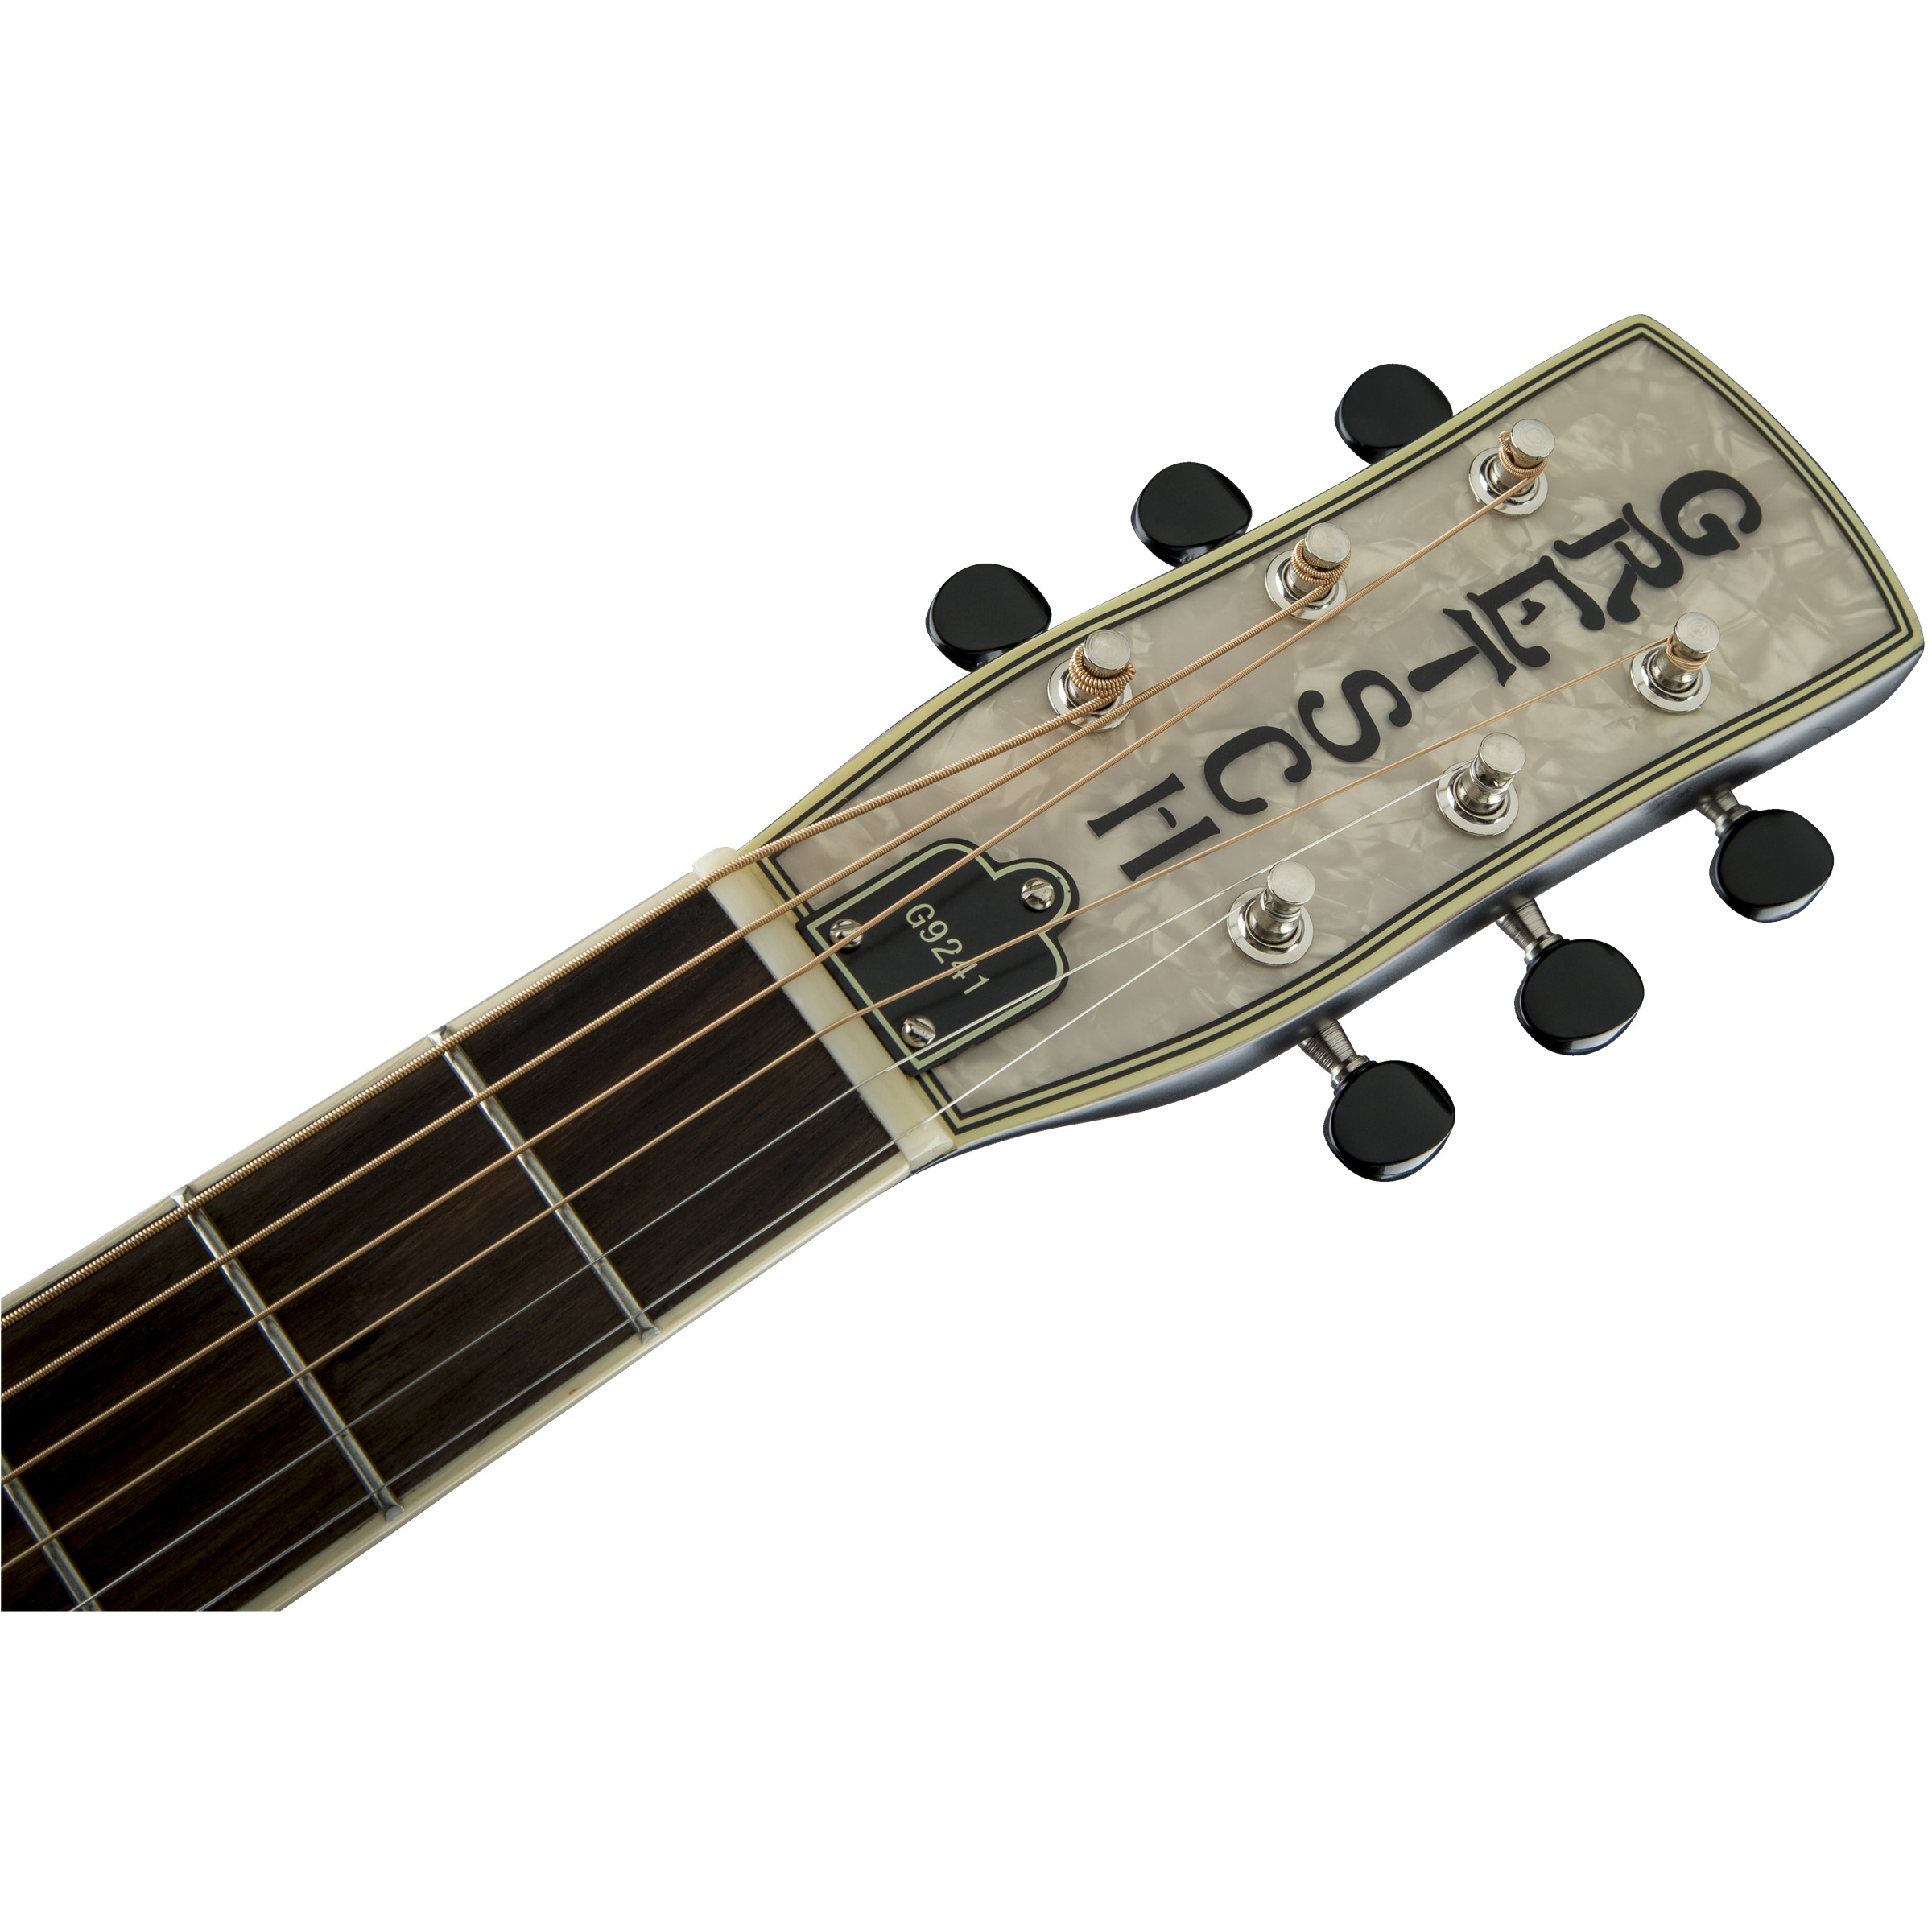 Gretsch G9240 Alligator™ Round-Neck, Mahogany Body Biscuit Cone Resonator Guitar, 2-Color Sunburst Гитары акустические